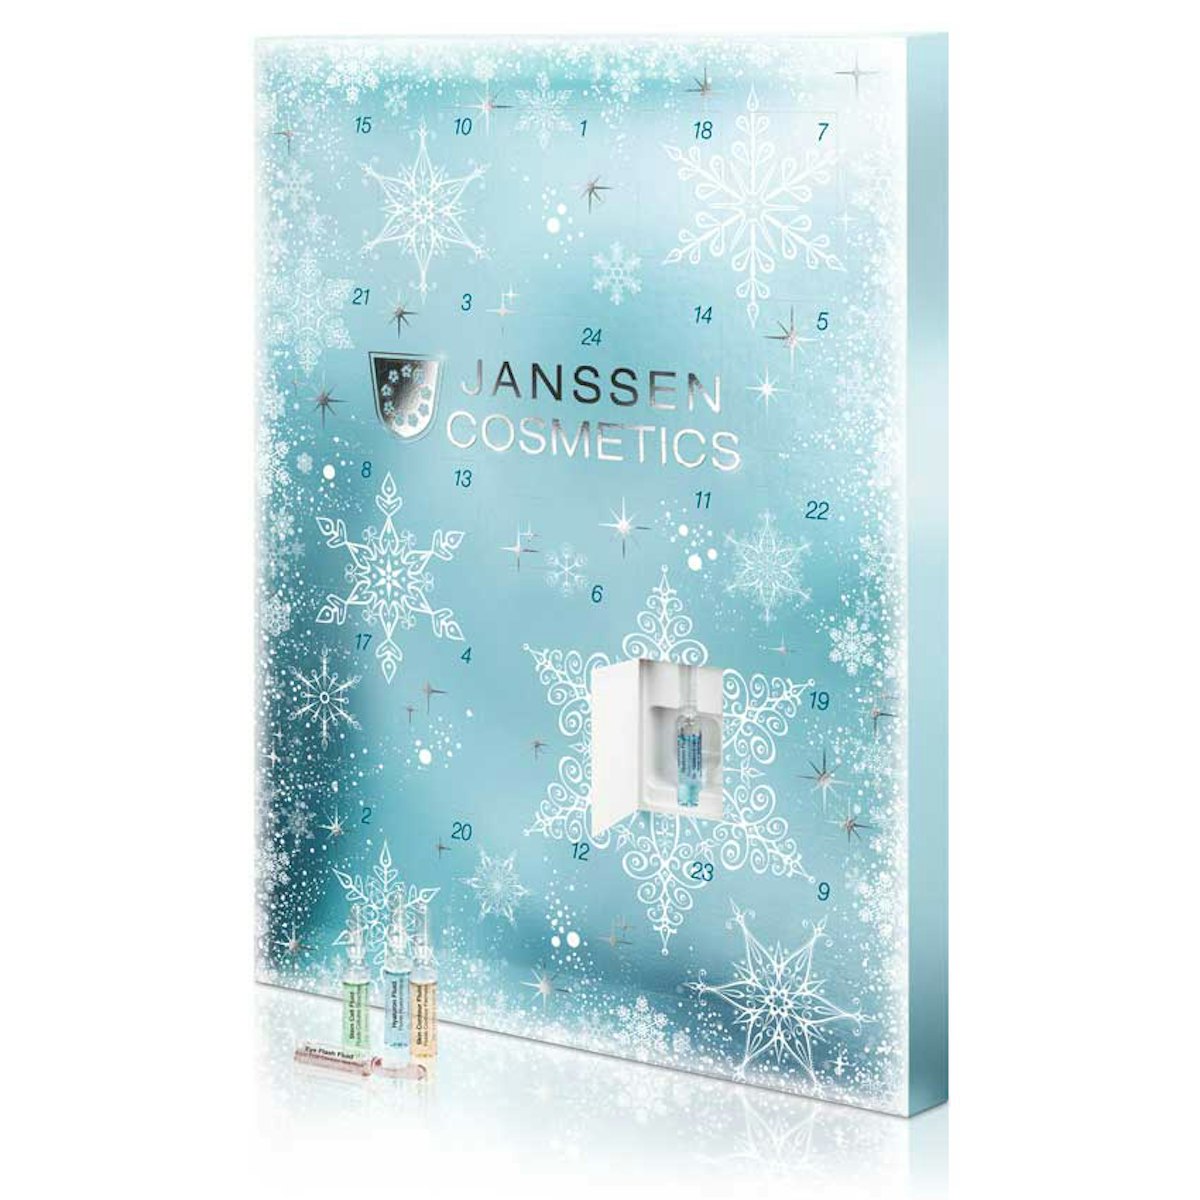 JANSSEN COSMETICS’ Ampoule and Care Advent Calendar Skin Inc.